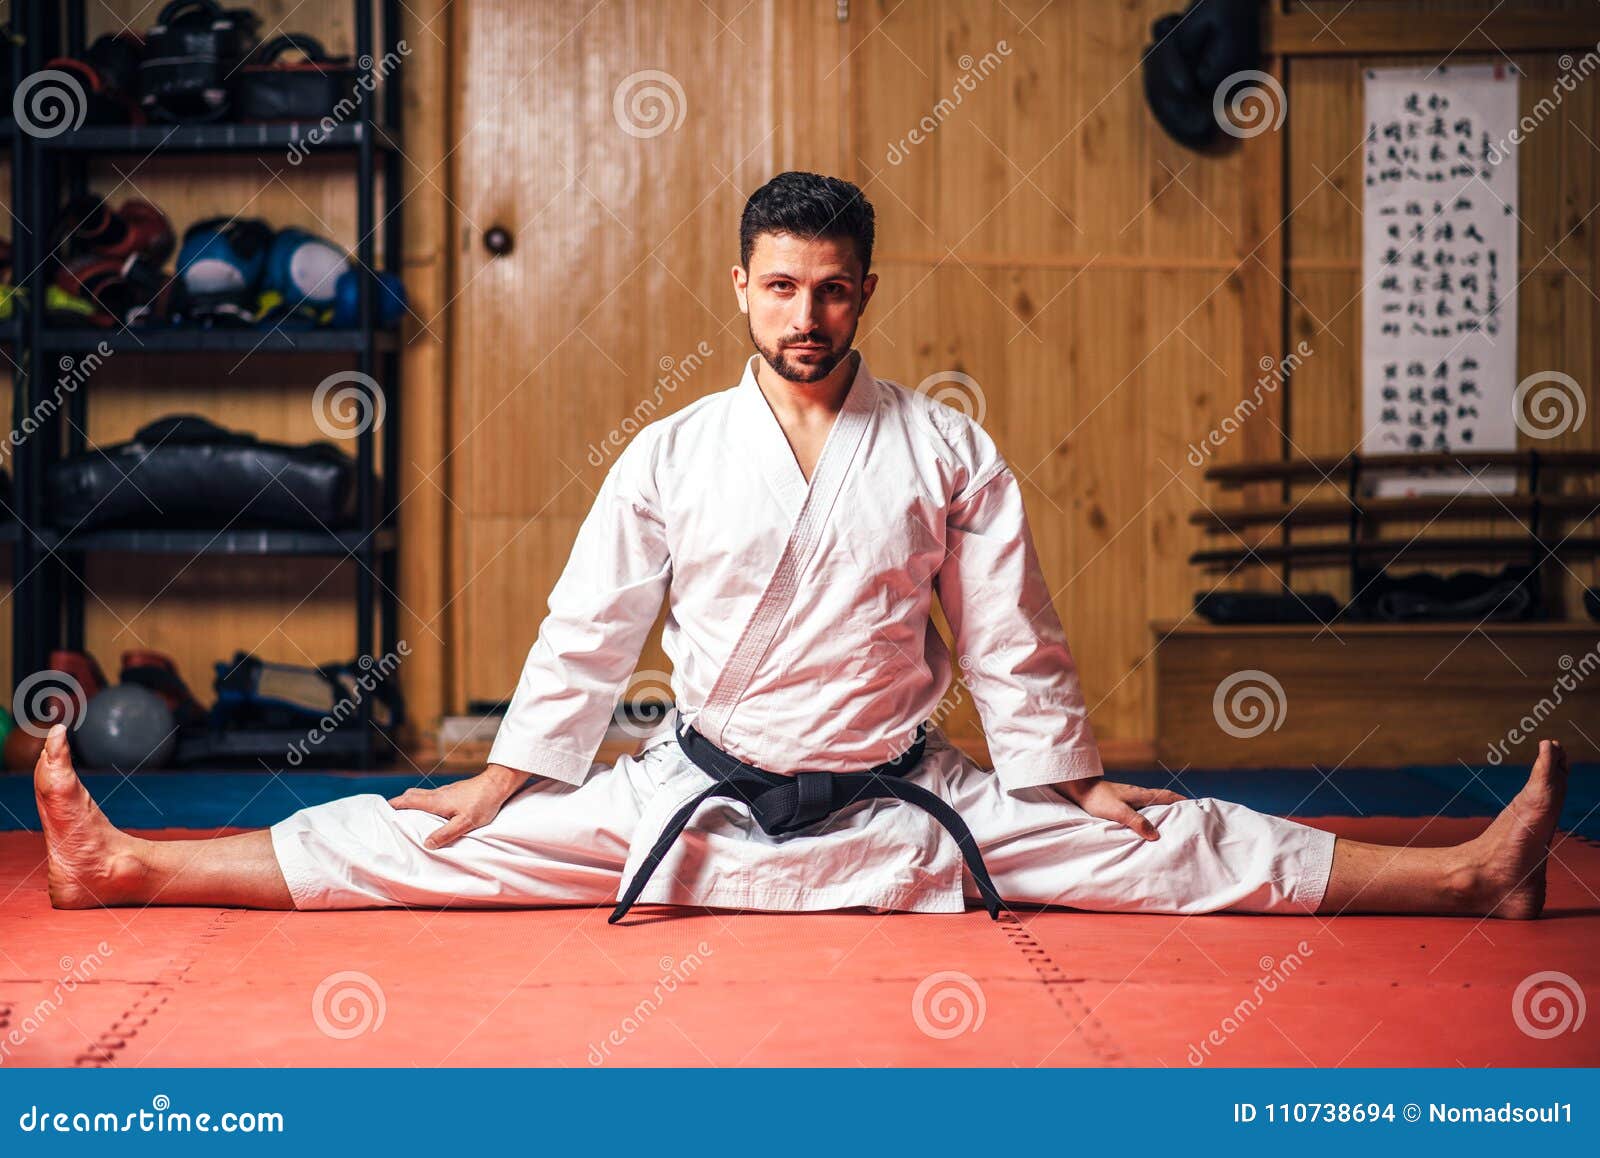 SPOKEY KIMONO FUGATO BLACK BELT Karate Judo Taekwondo Martial Art Adult 320cm 